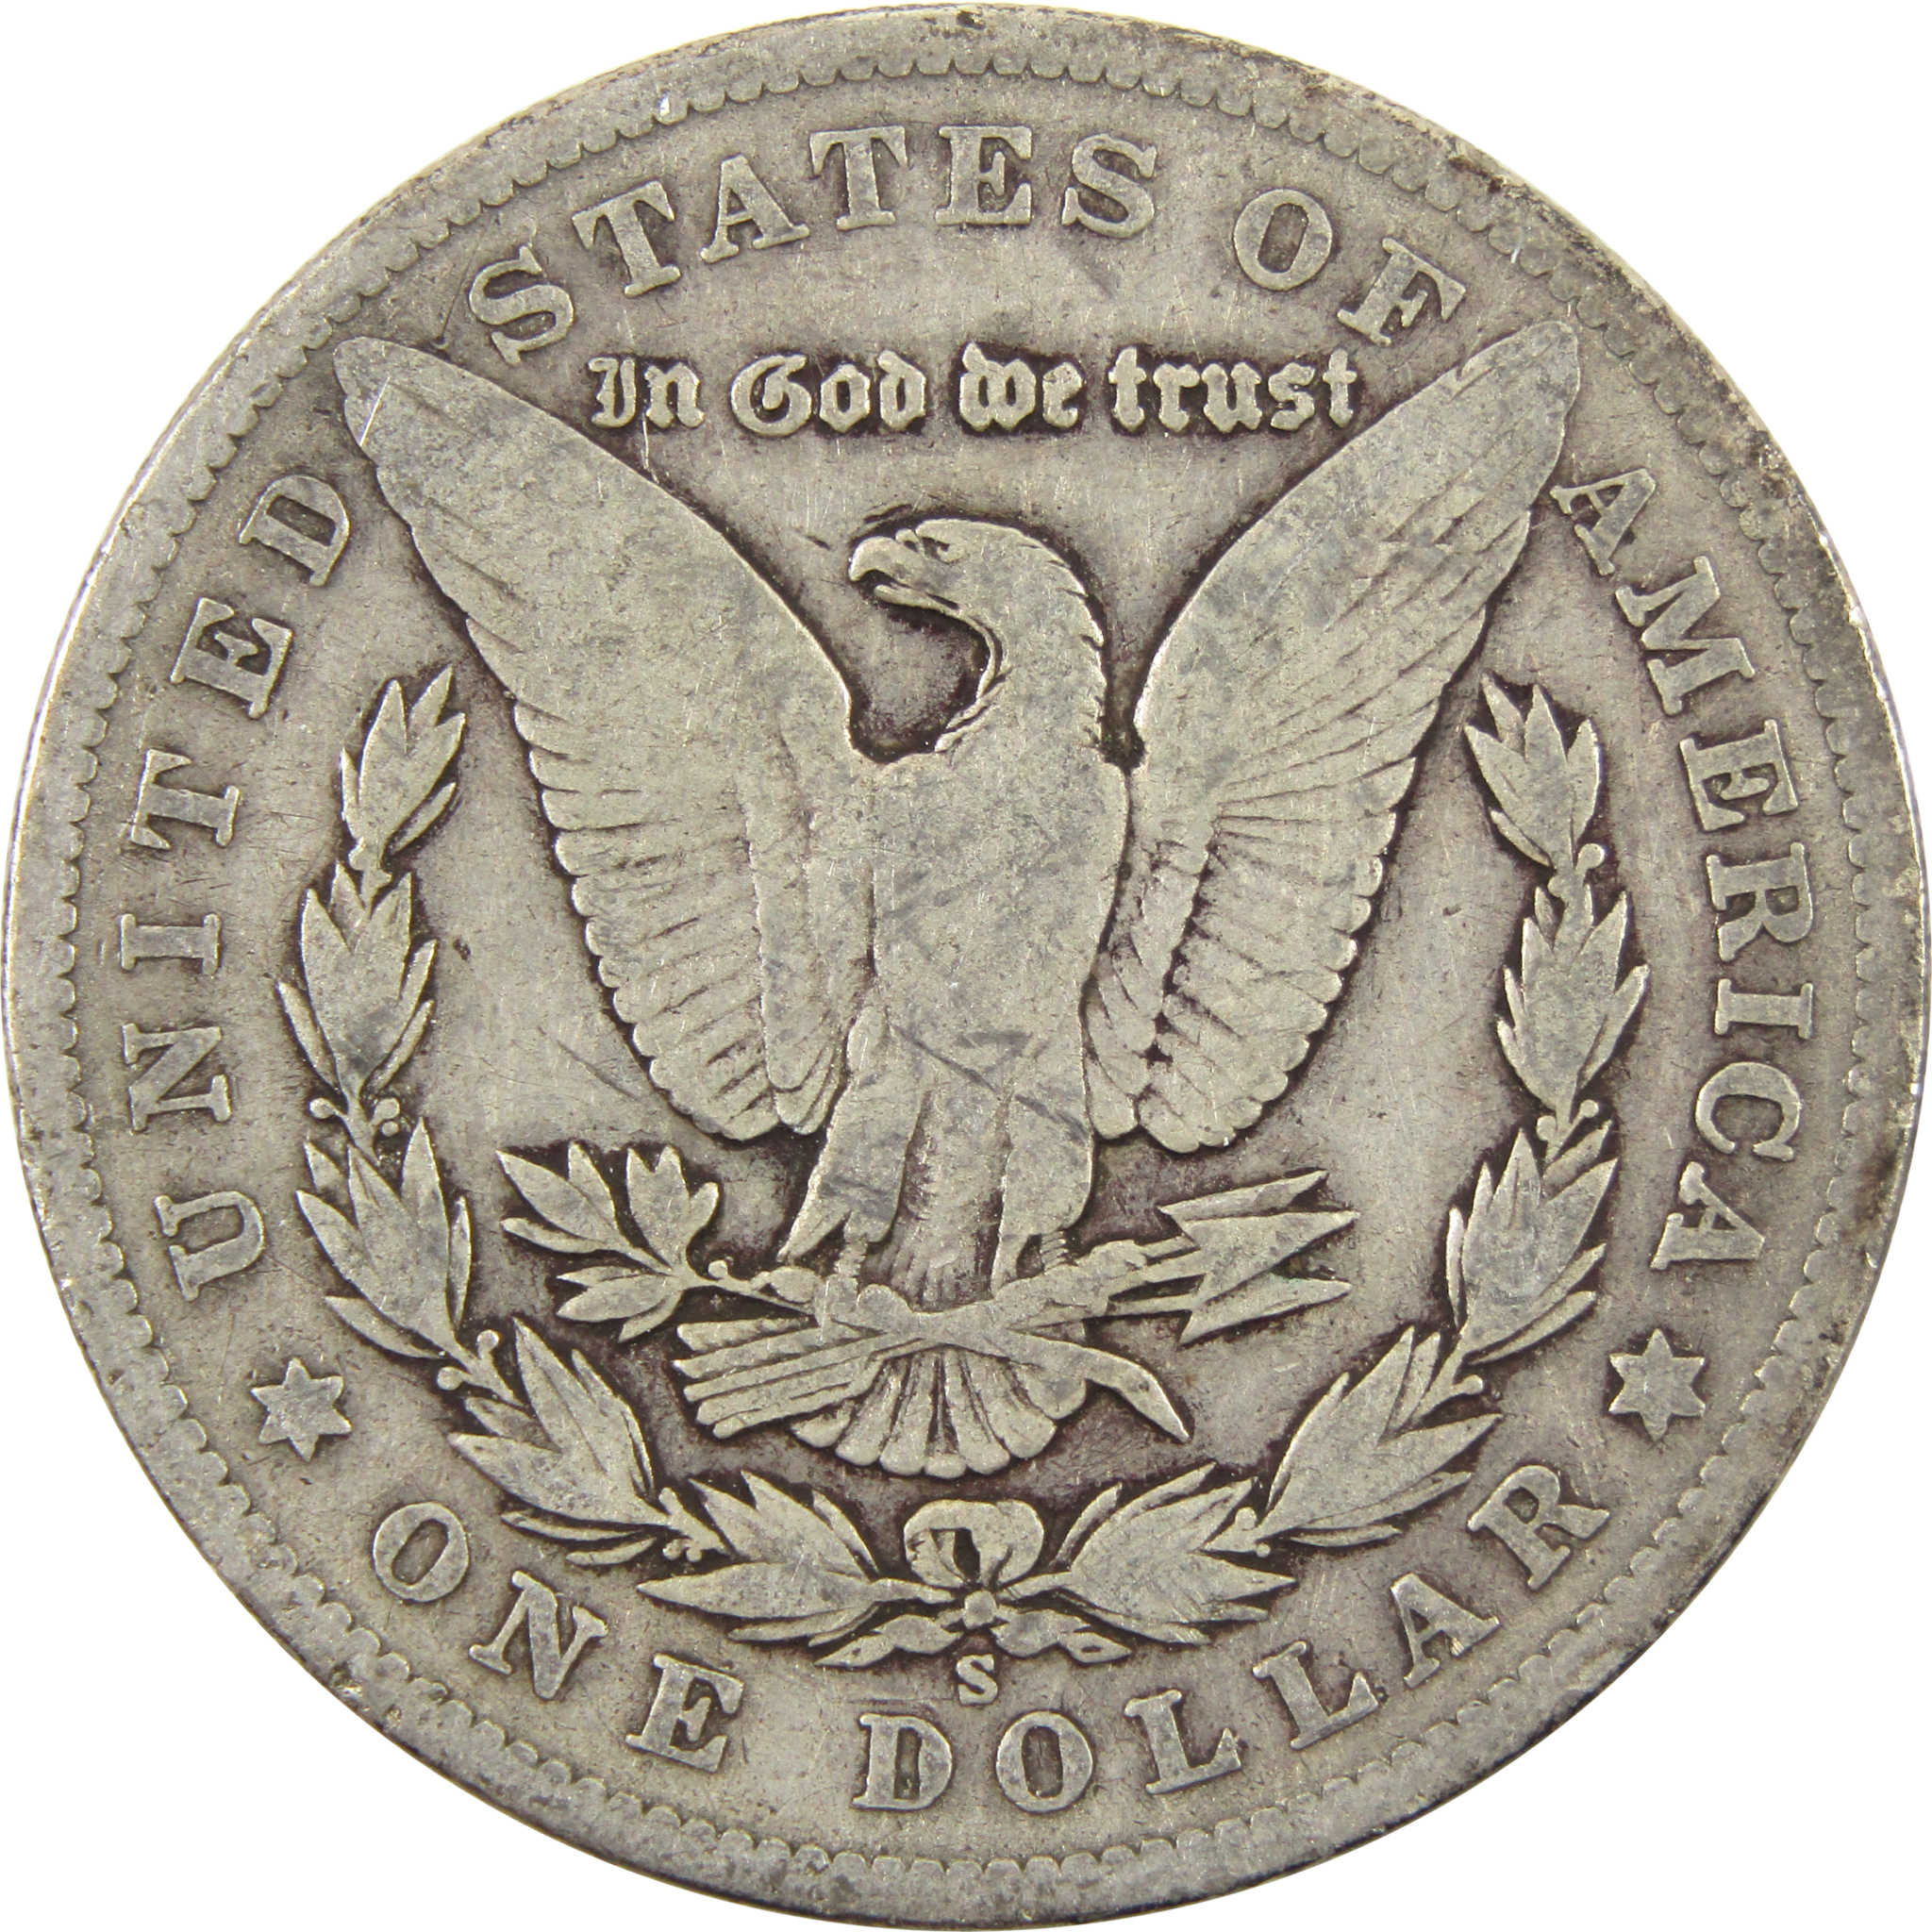 1903 S Morgan Dollar VG Very Good 90% Silver $1 Coin SKU:I10690 - Morgan coin - Morgan silver dollar - Morgan silver dollar for sale - Profile Coins &amp; Collectibles